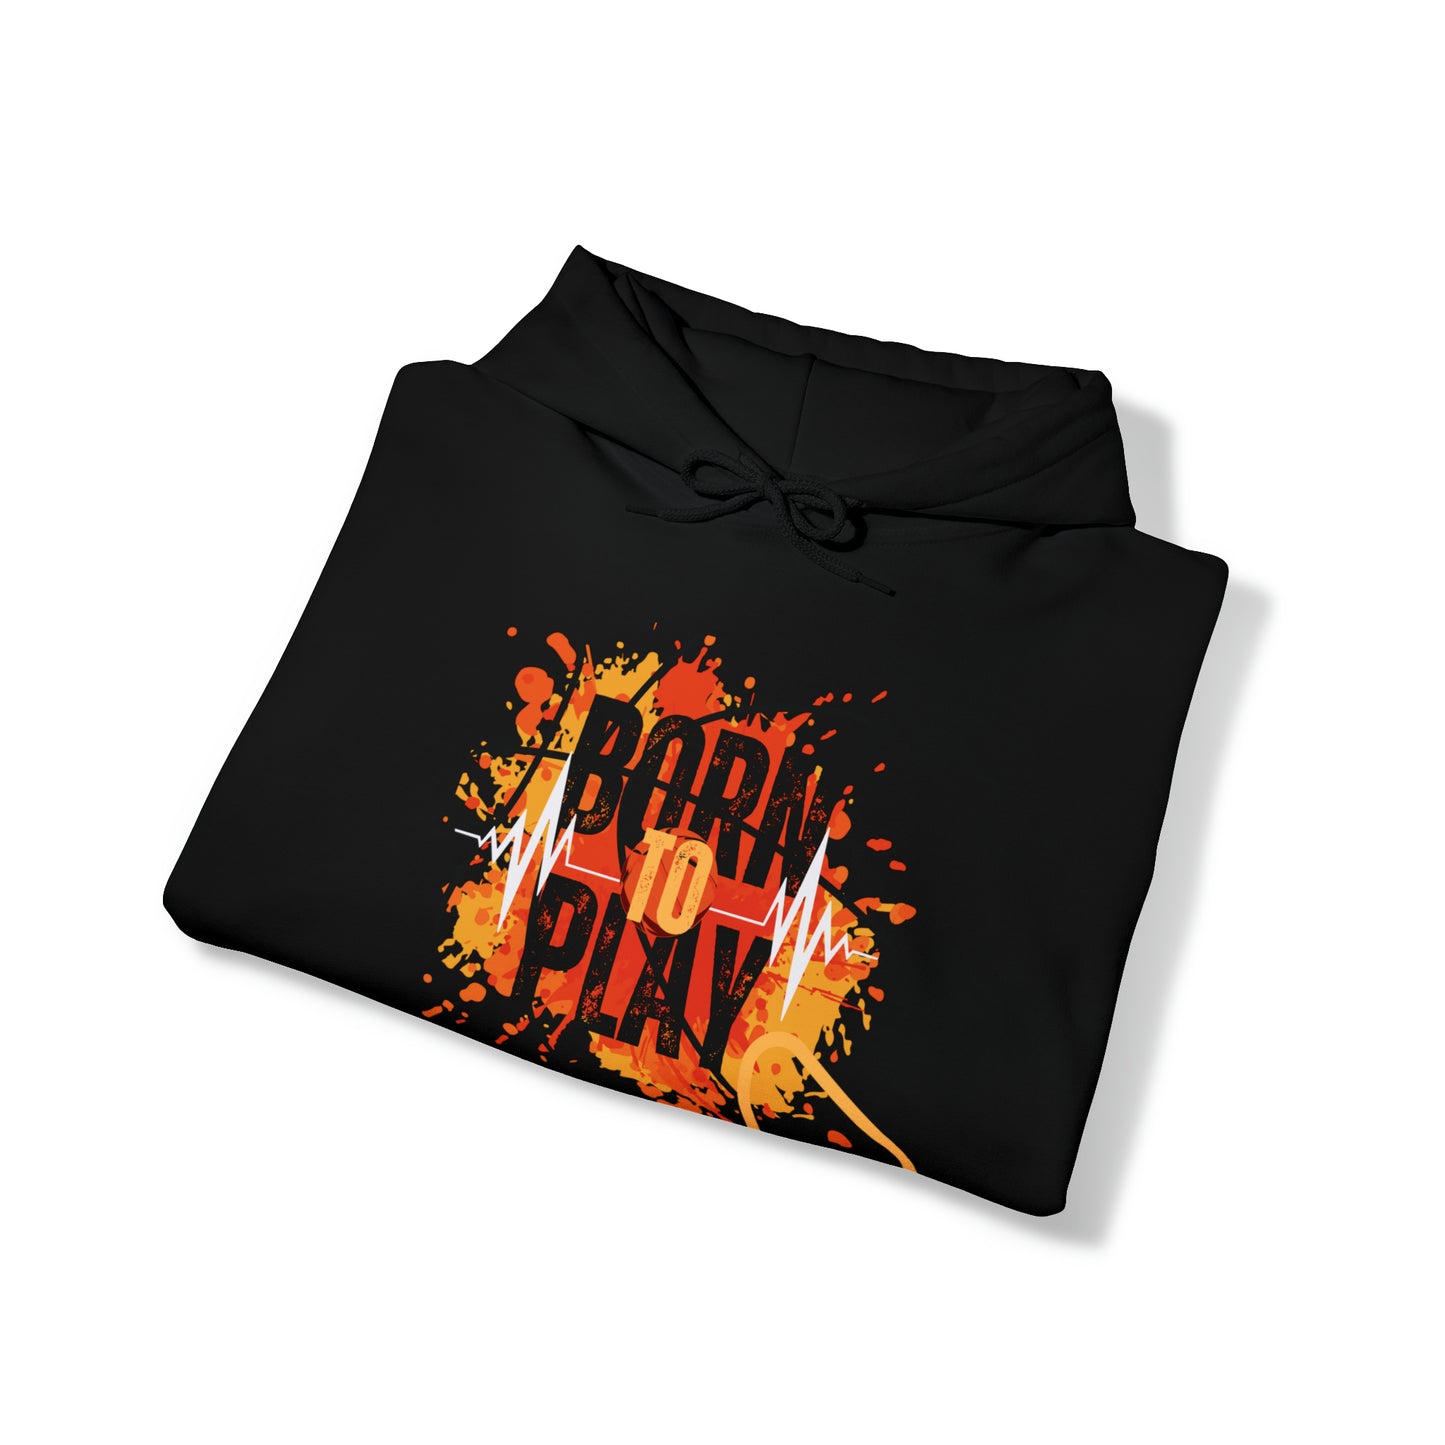 Born To play - Unisex Heavy Blend™ Hooded Sweatshirt